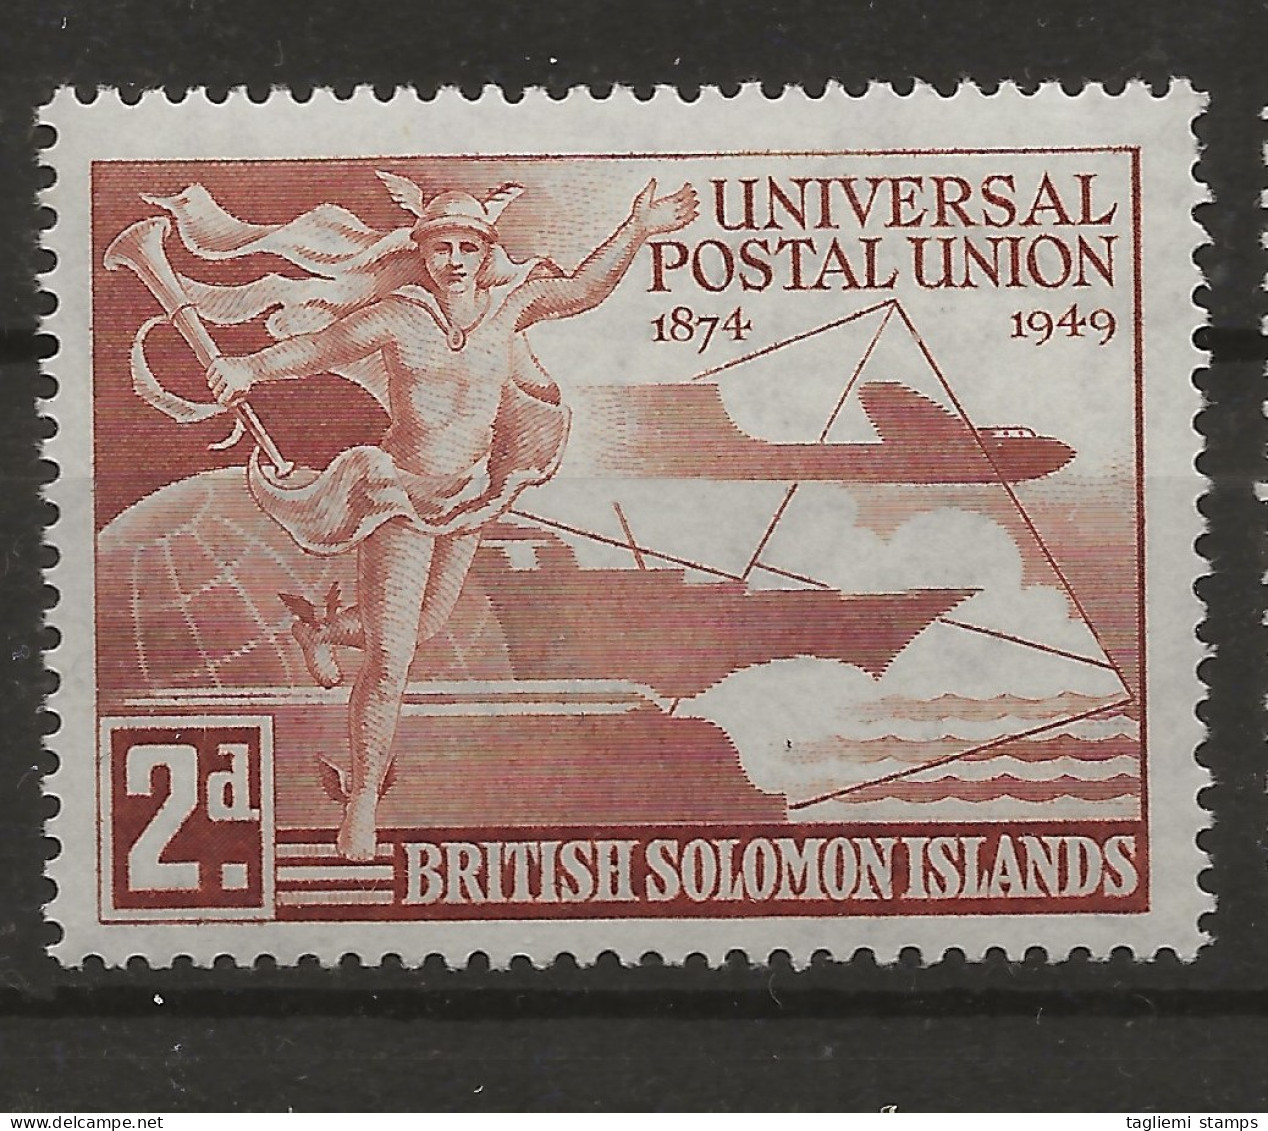 British Solomon Islands, 1949, SG  77, MNH - Salomonen (...-1978)